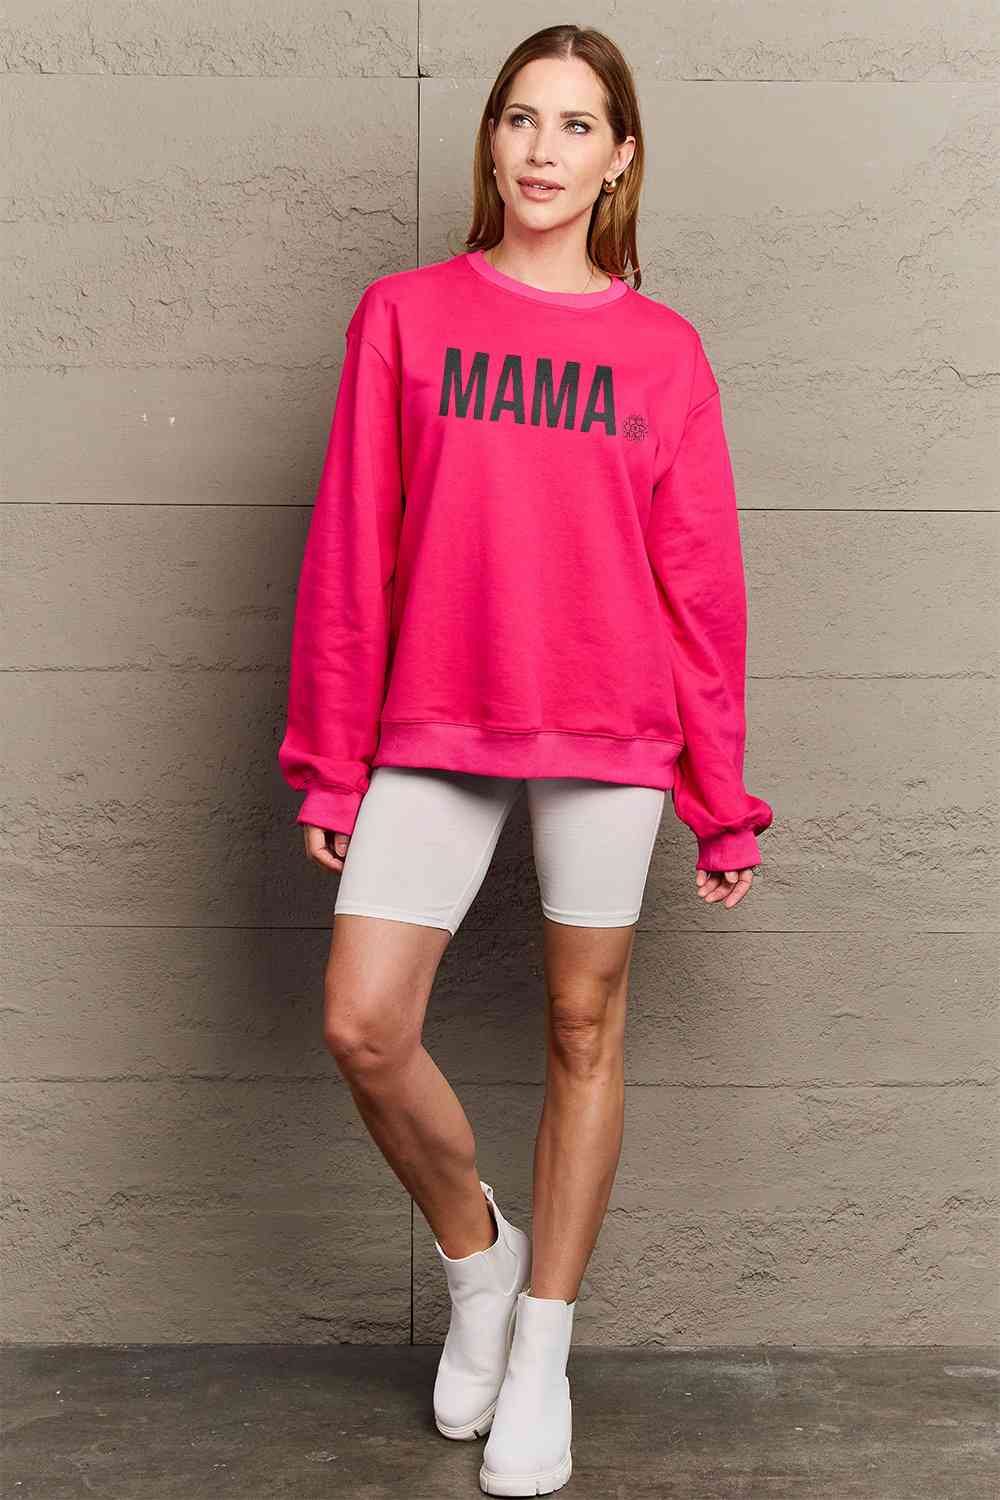 Full Size MAMA Graphic Long Sleeve Sweatshirt